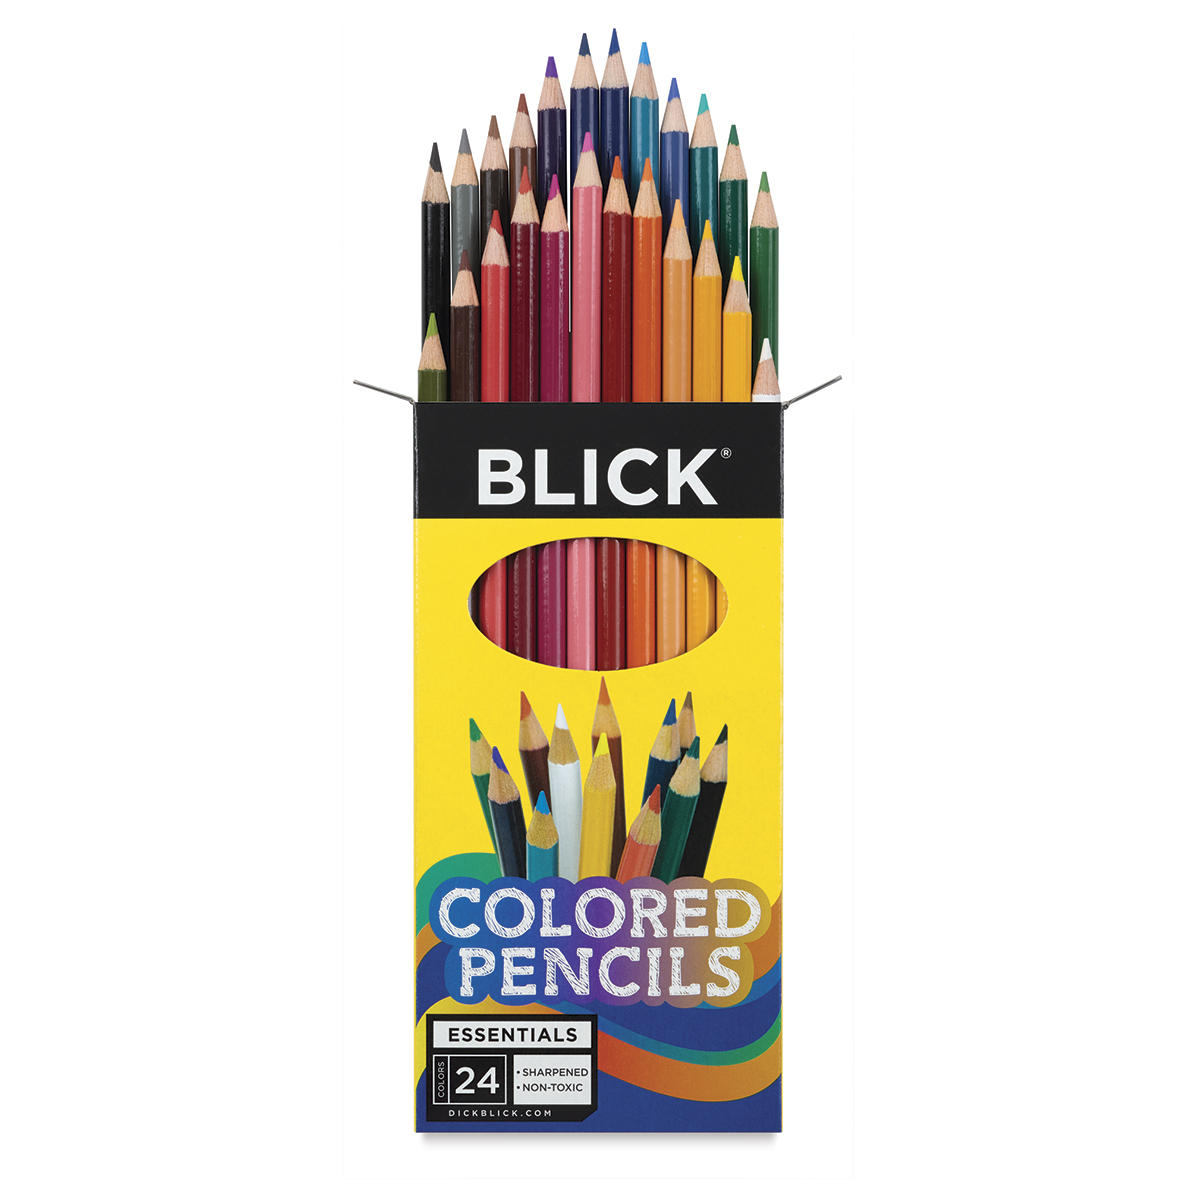 Blick Studio Artists Colored Pencils and Sets